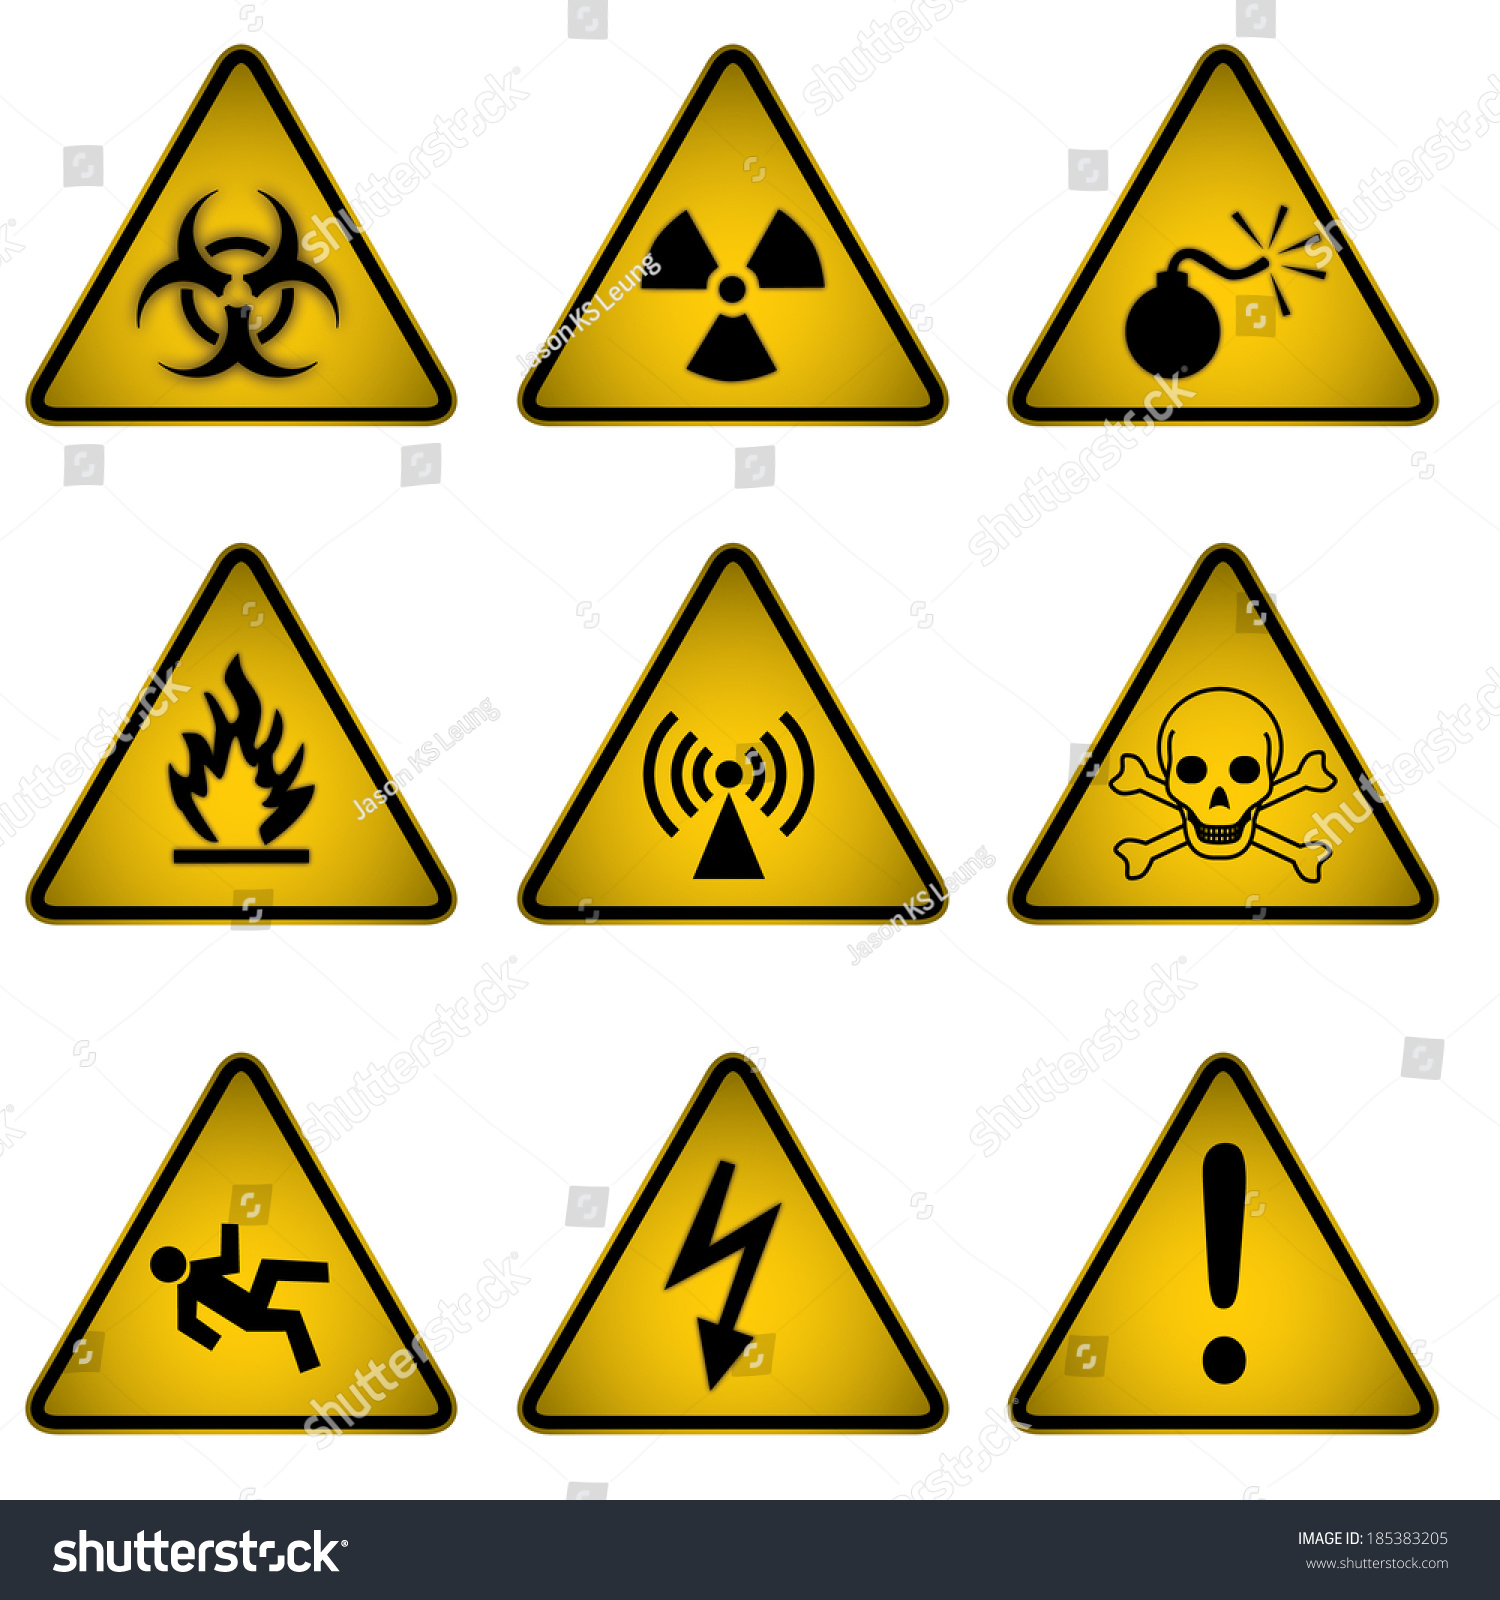 Hazard Icons And Symbols Stock Vector Illustration 185383205 : Shutterstock